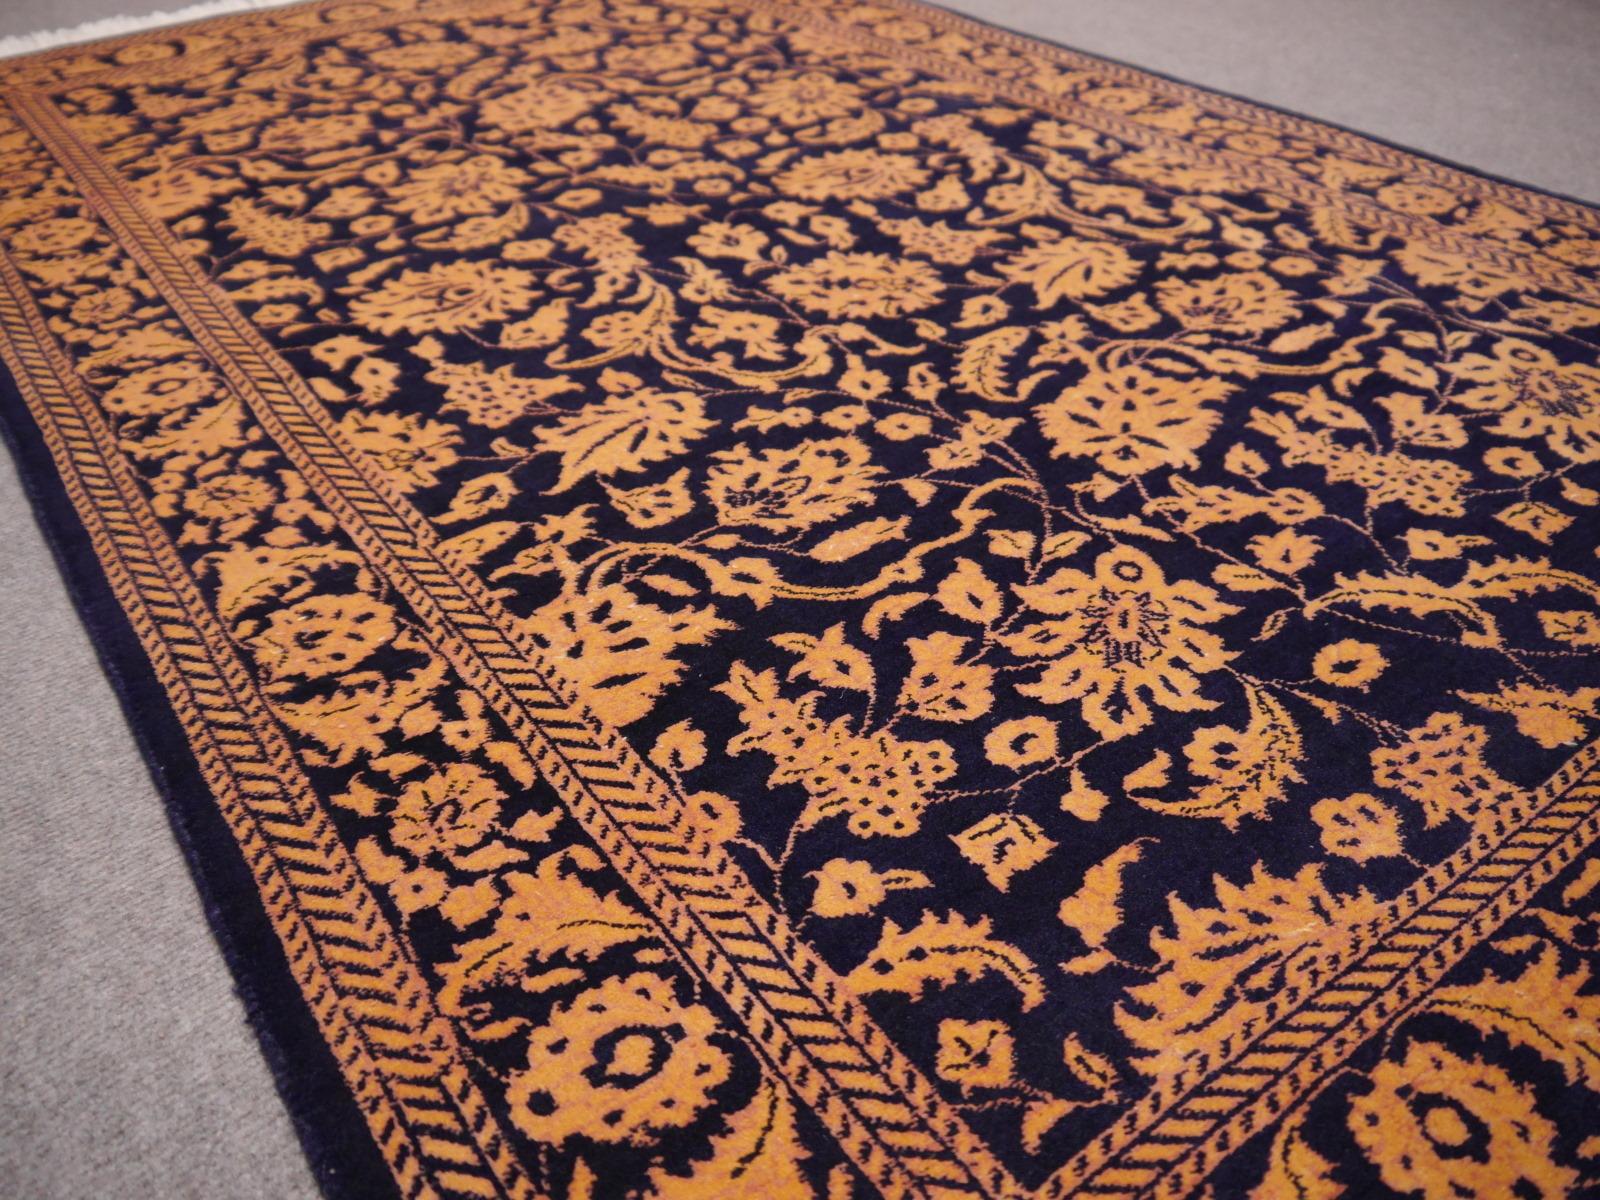 20th Century Fine Contemporary Wool and Silk Srinagar Carpet For Sale